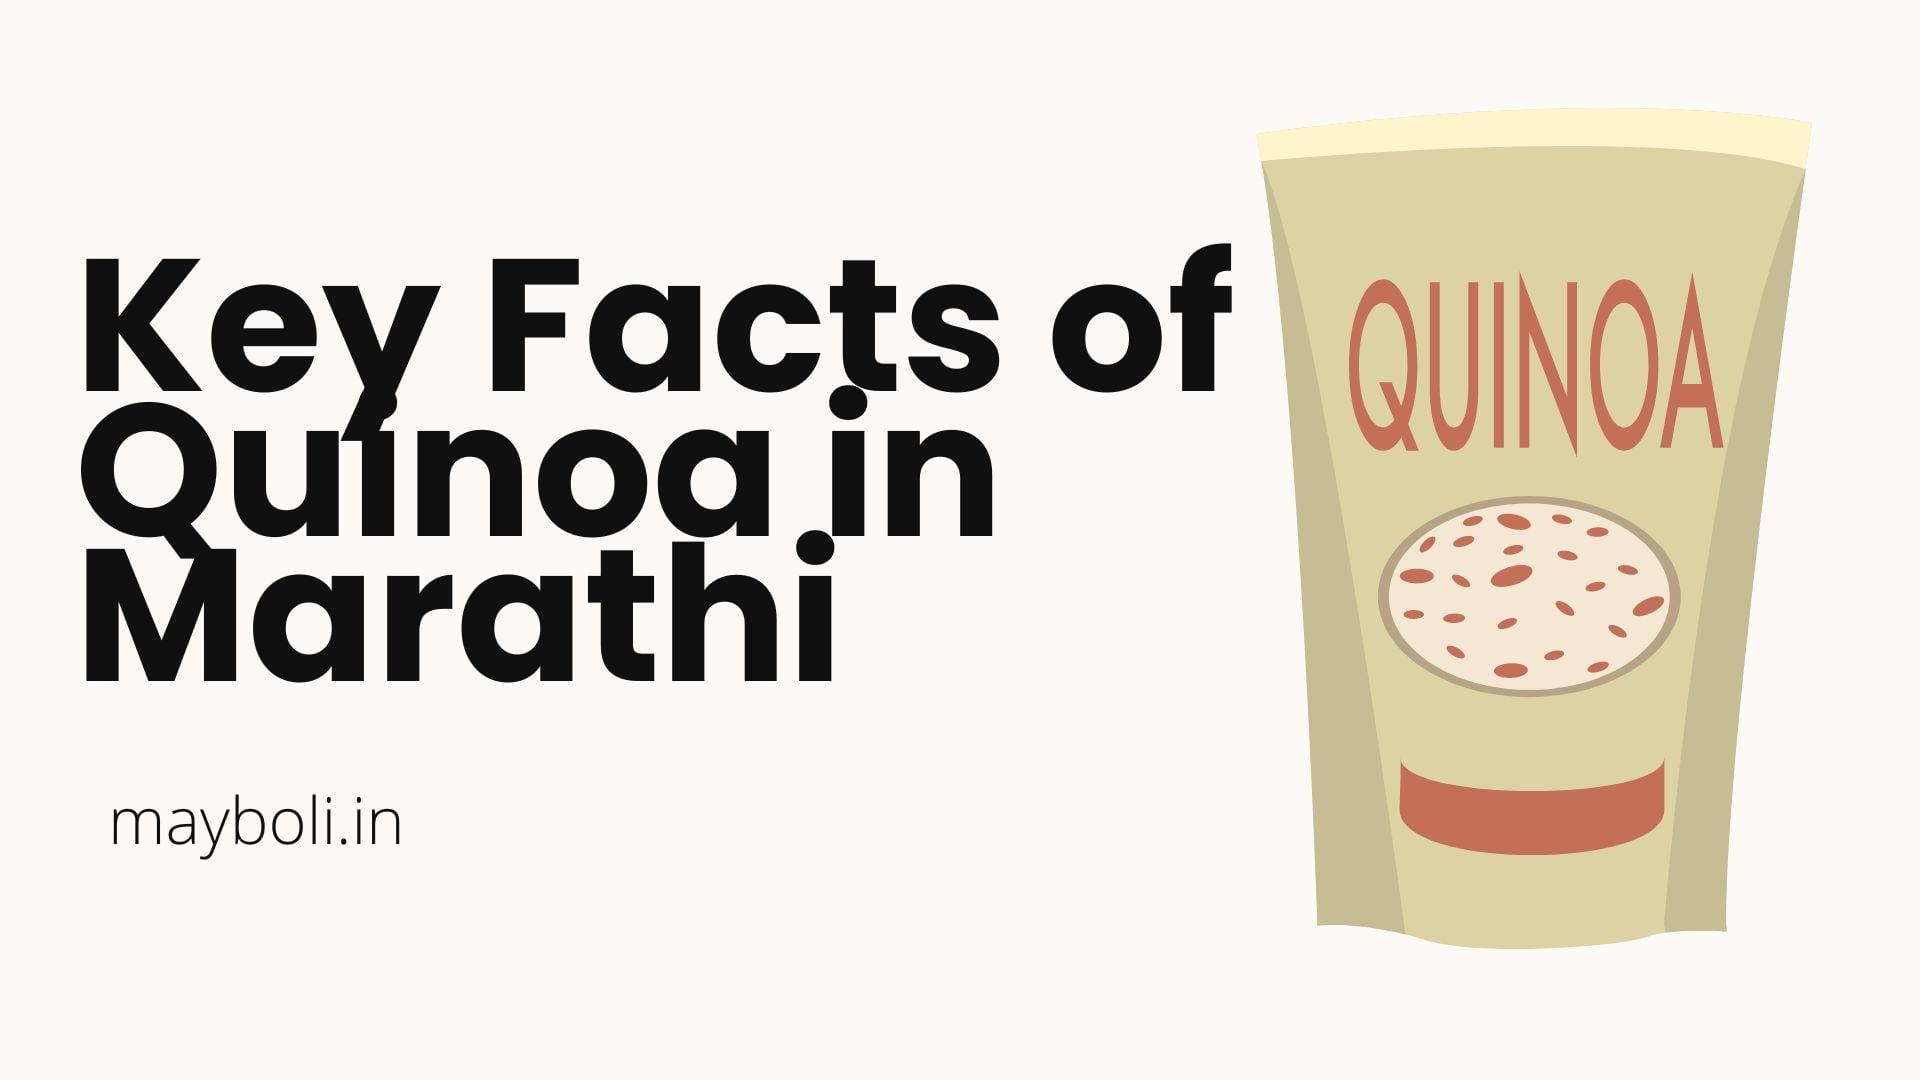 Key Facts of Quinoa in Marathi